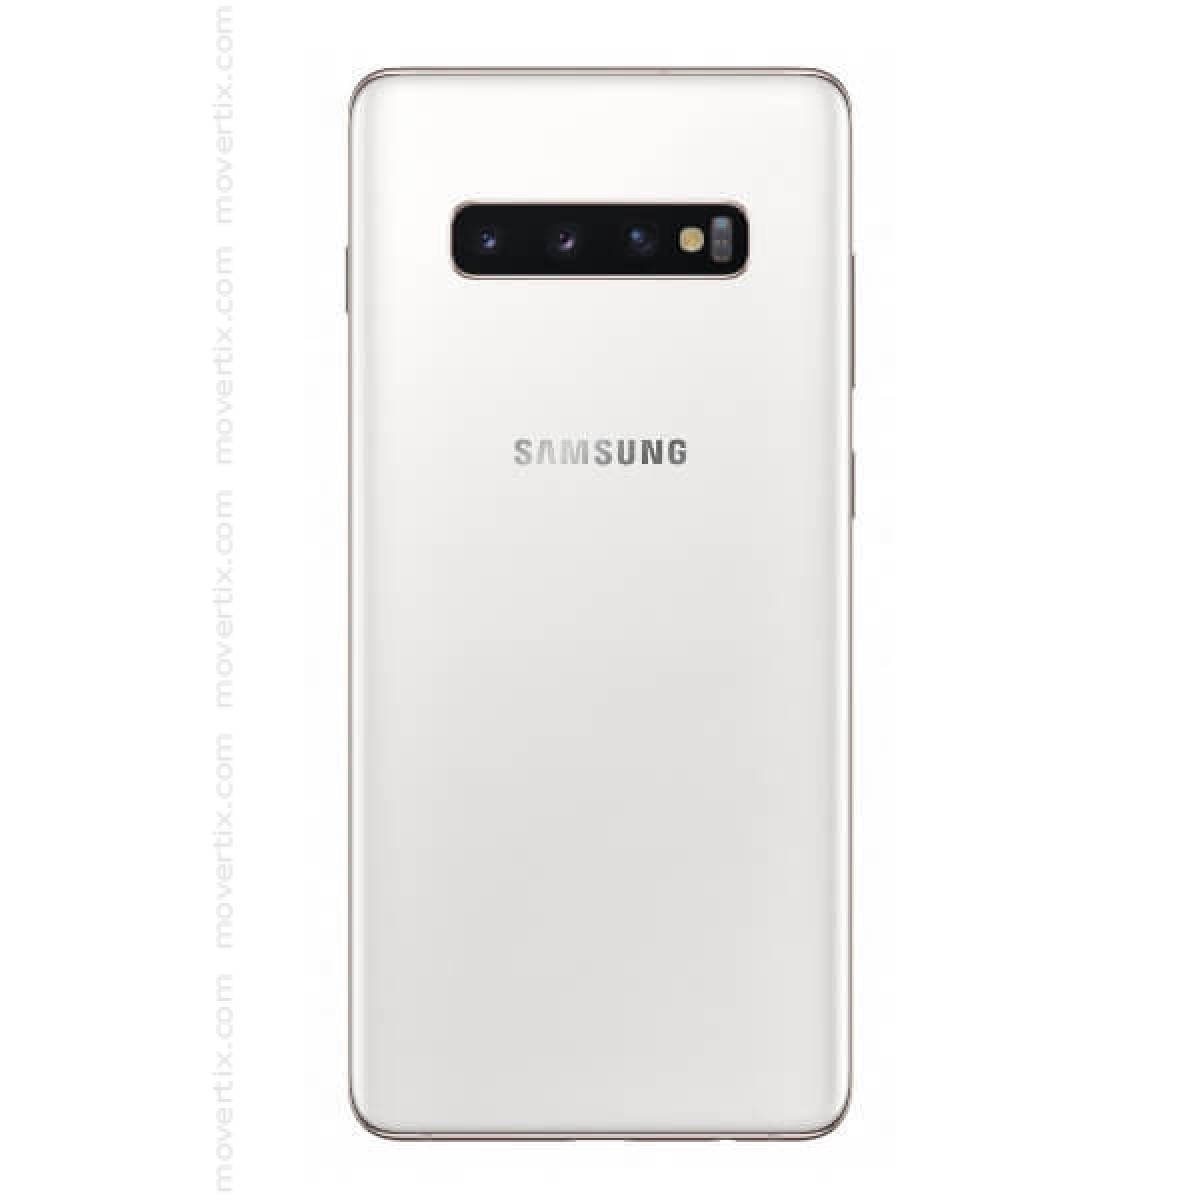 Samsung Galaxy S10 Plus Dual Sim Ceramic White 1tb And 12gb Ram